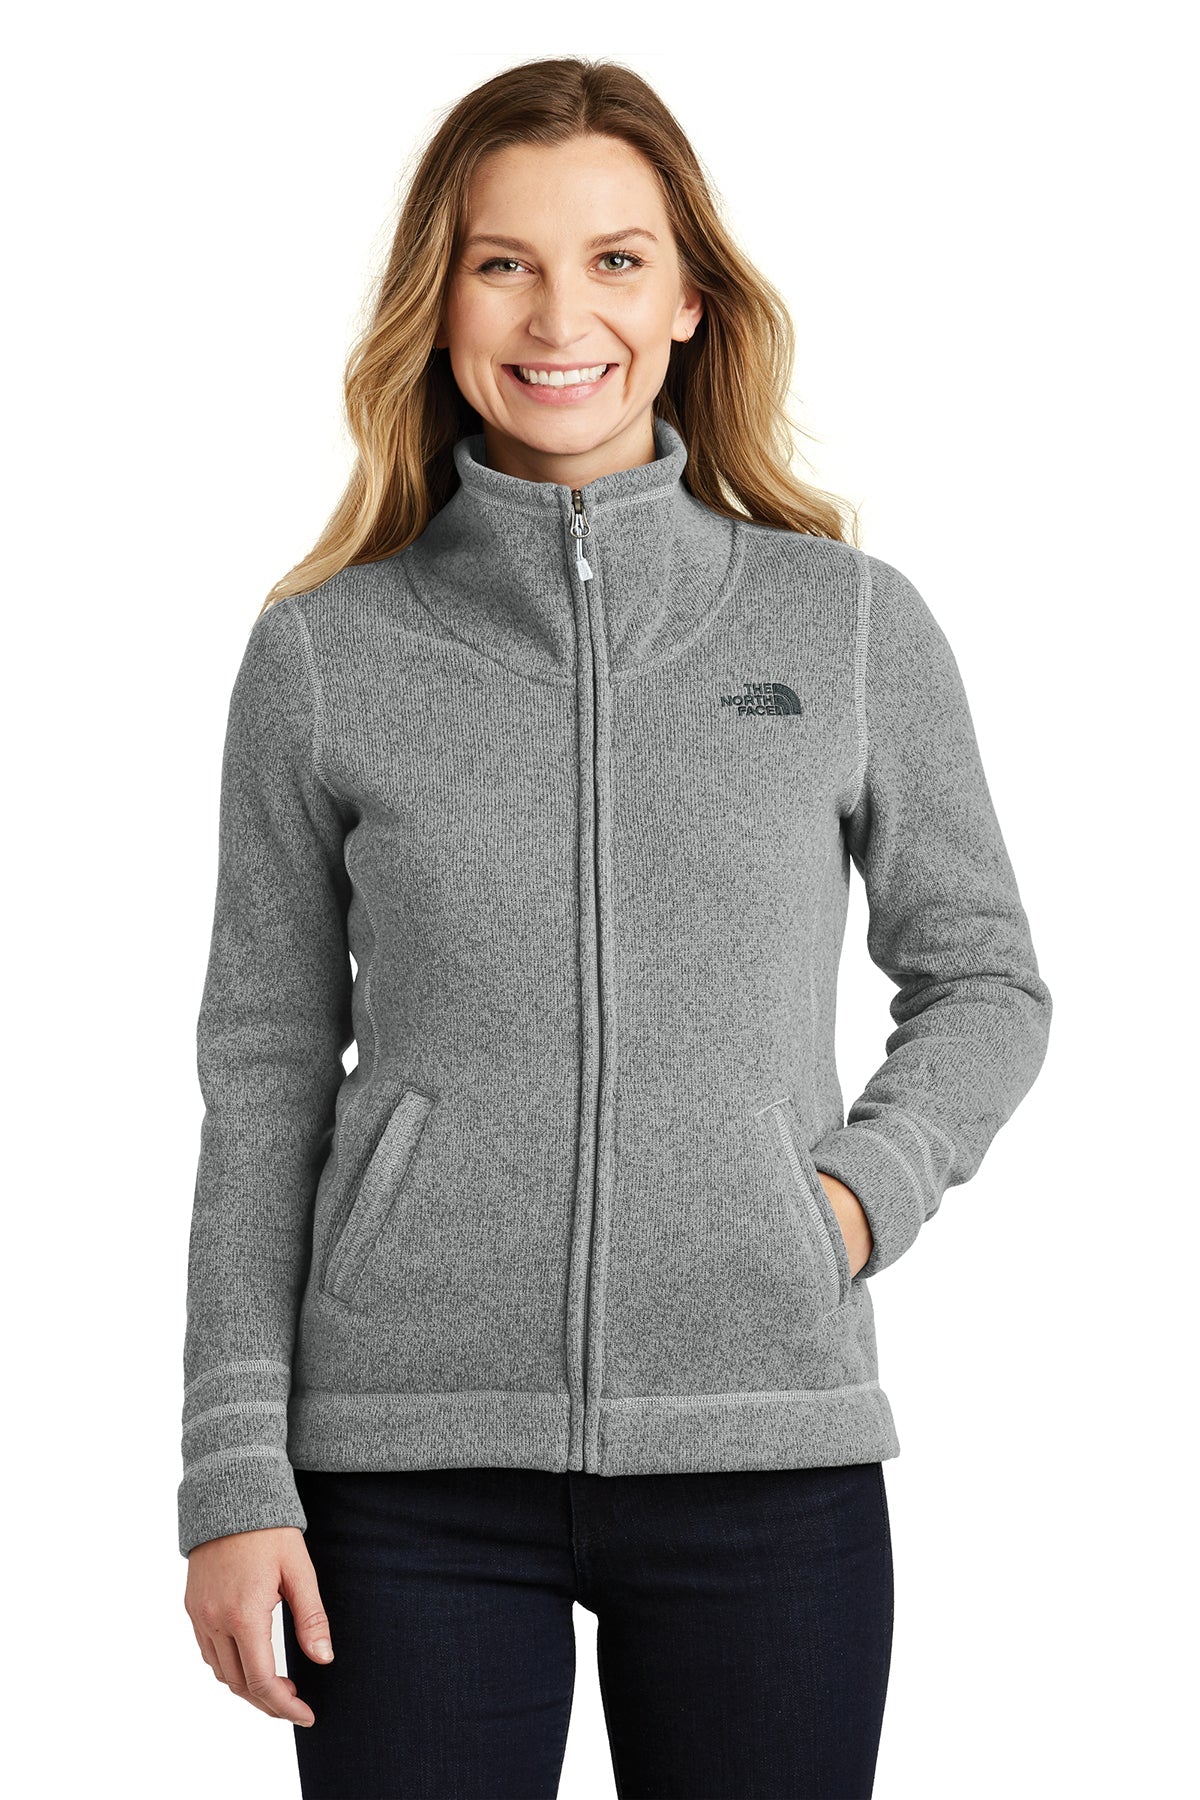 B2B1 The North Face® Ladies Sweater Fleece Jacket